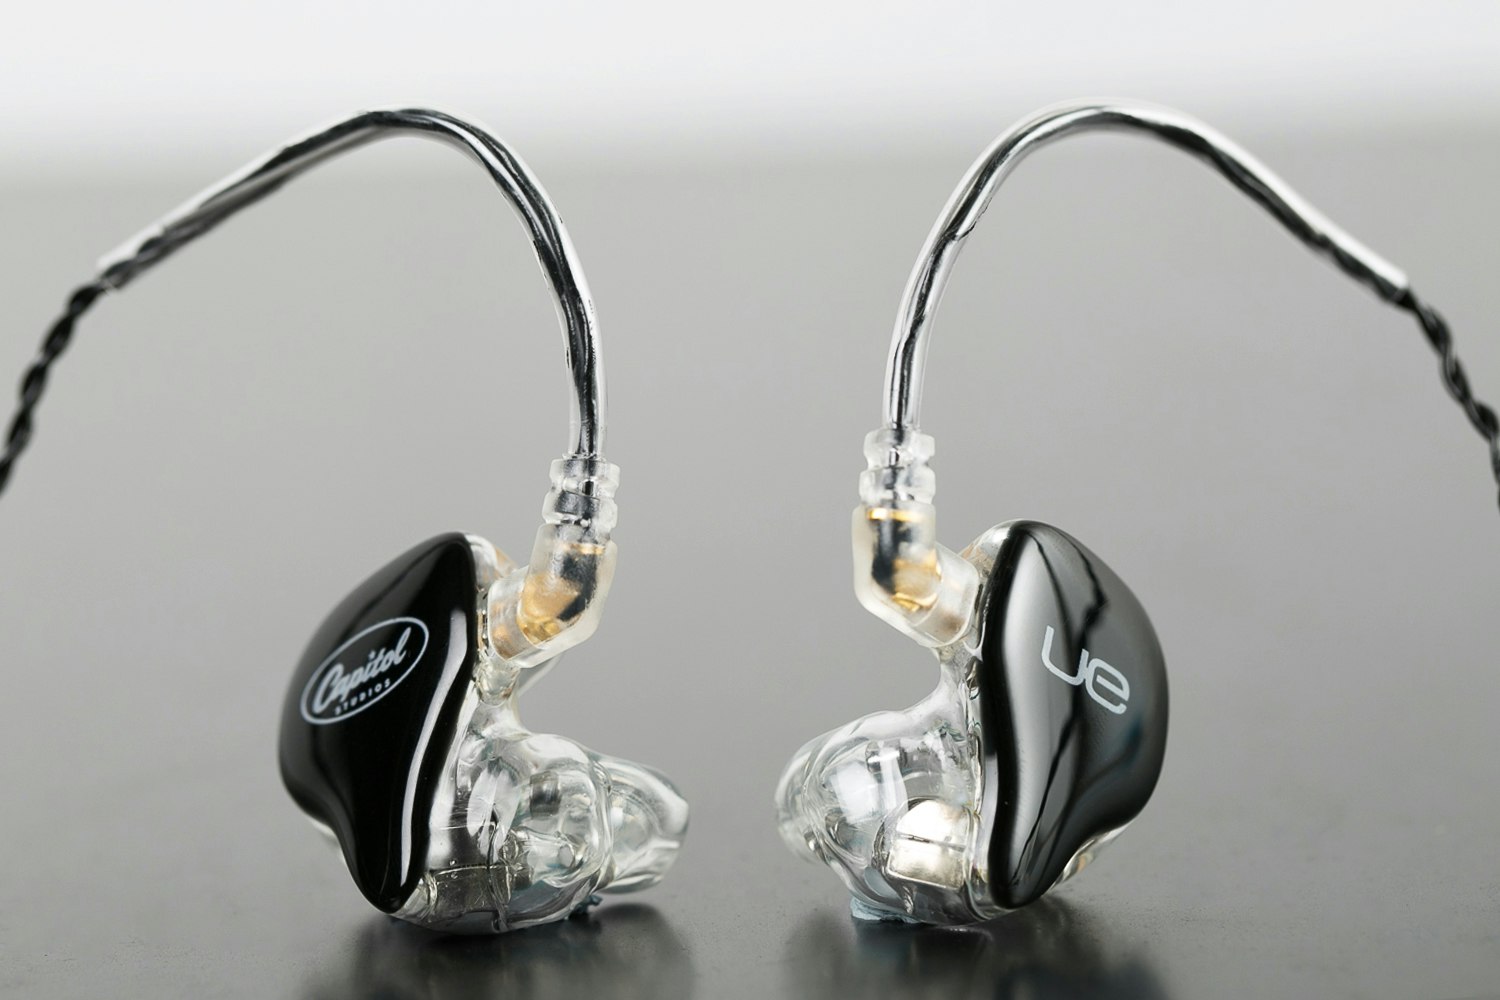 Ultimate Ears Custom In-Ear Reference Monitors | Audiophile | Drop